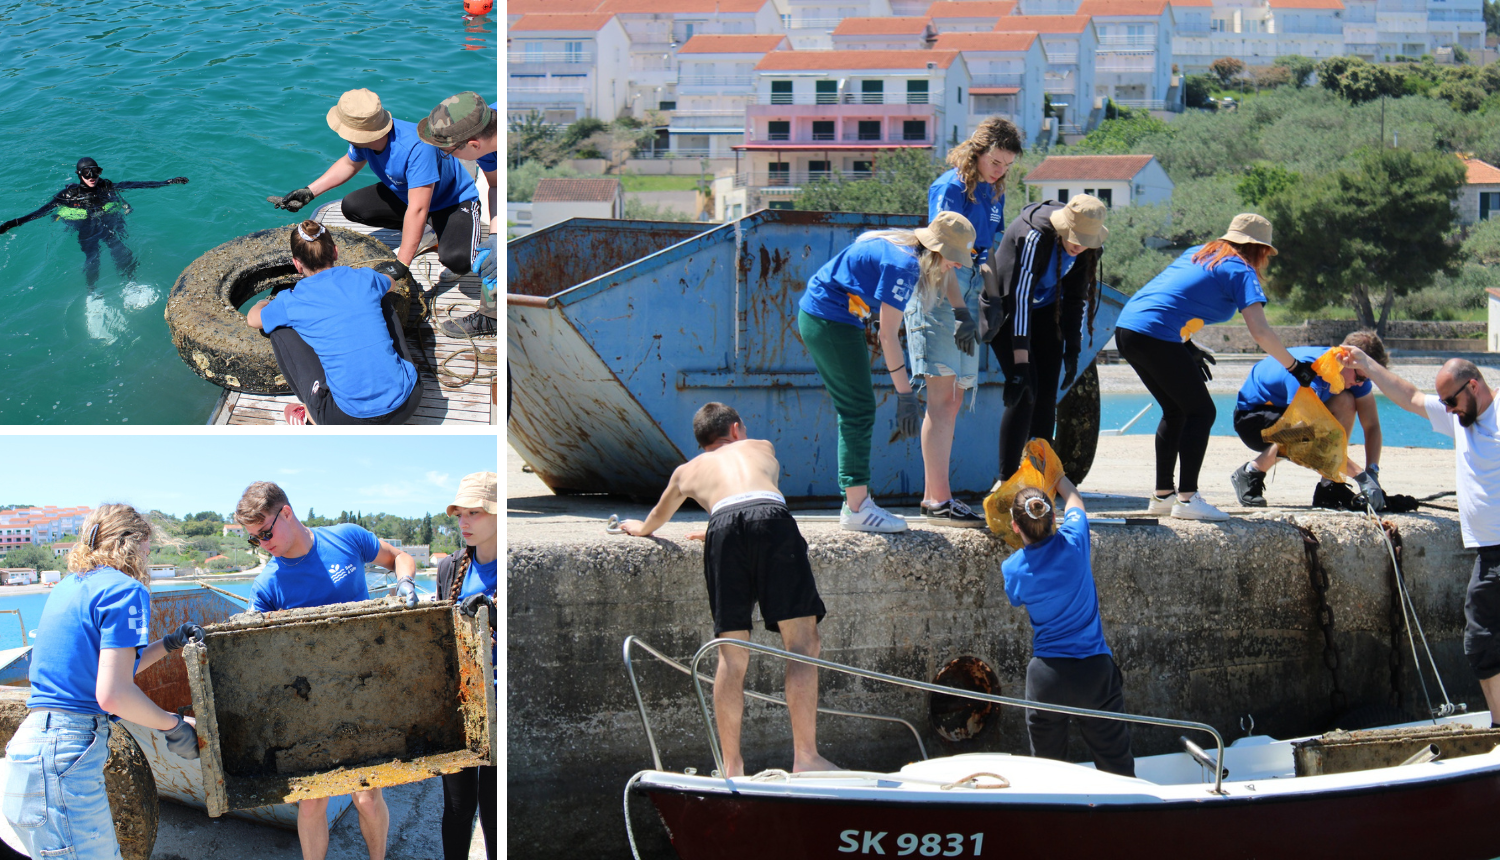 Ekoakcija na Šolti: Volonteri zasukali rukave pa očistili plažu i podmorje. 'Svi su tili dat ruke'